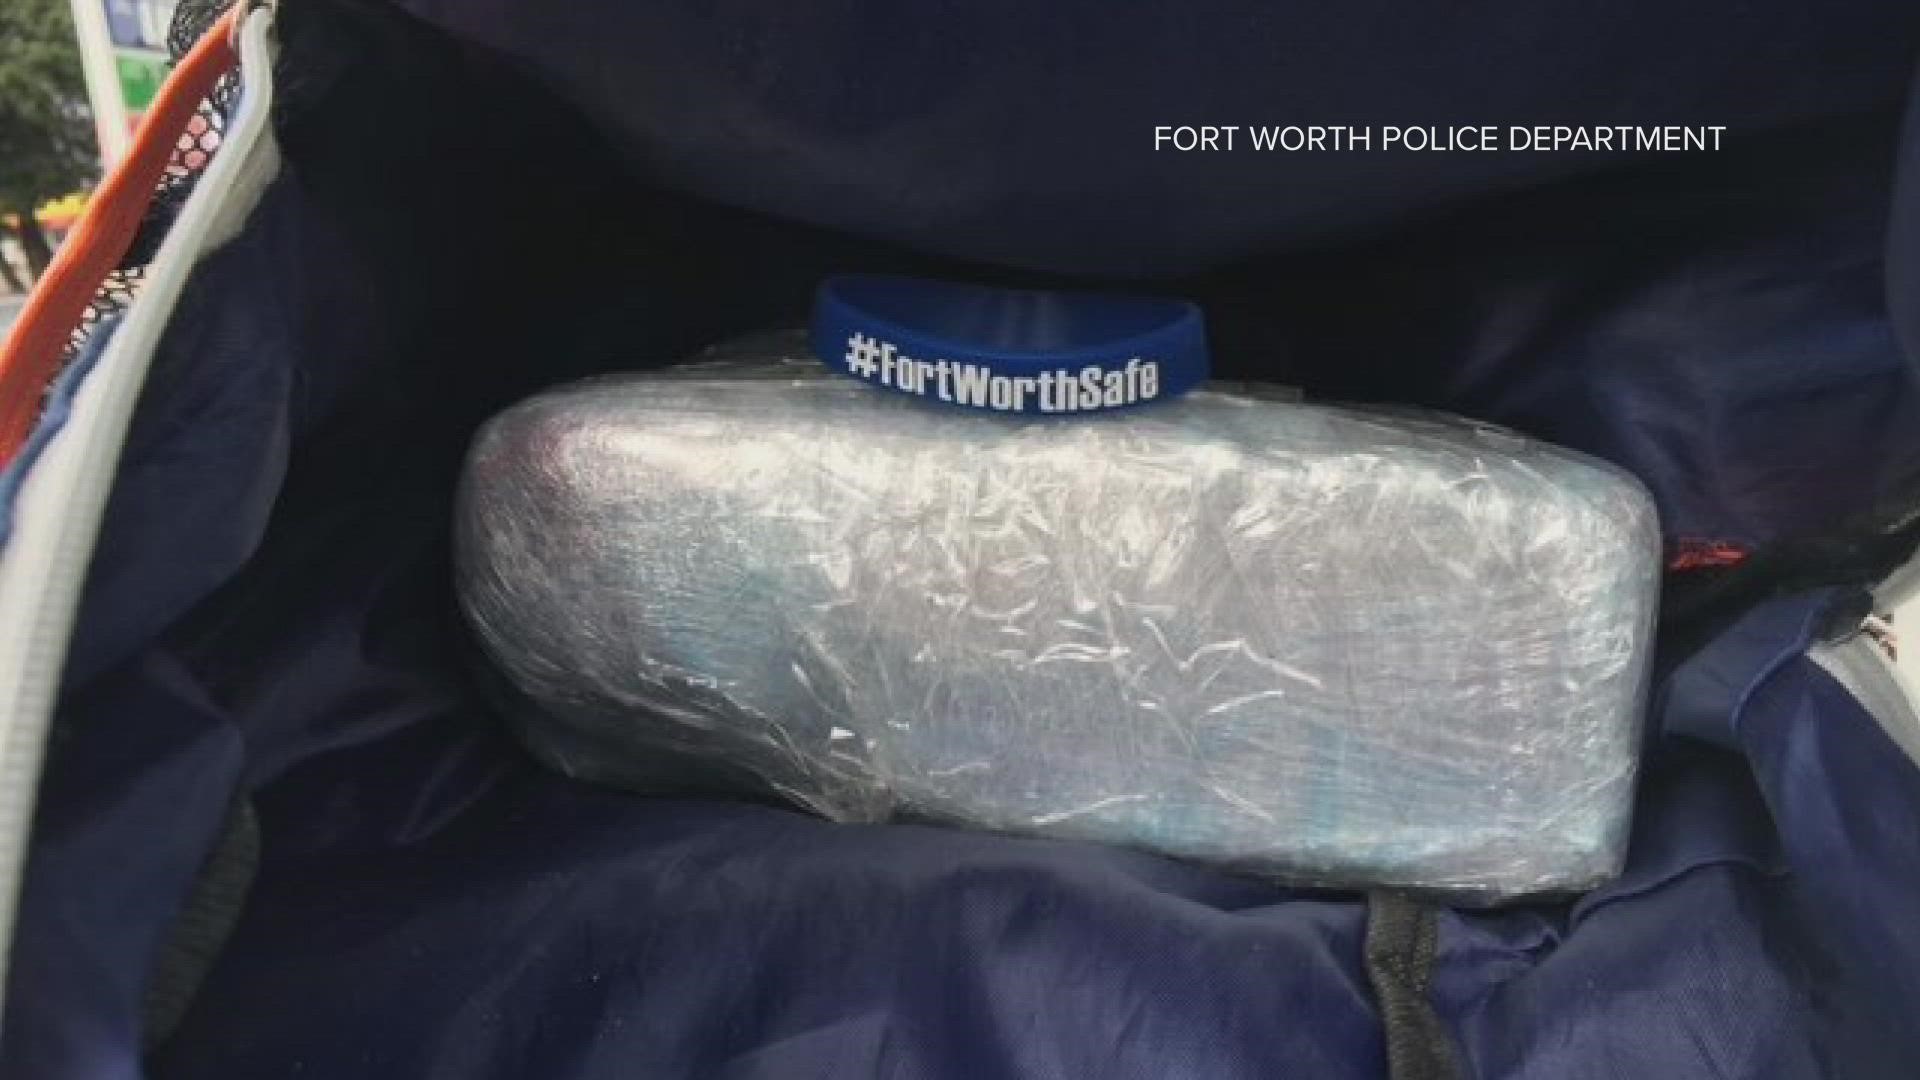 Fort Worth police say the drug bust happened on Nov. 4 and led to four arrests.